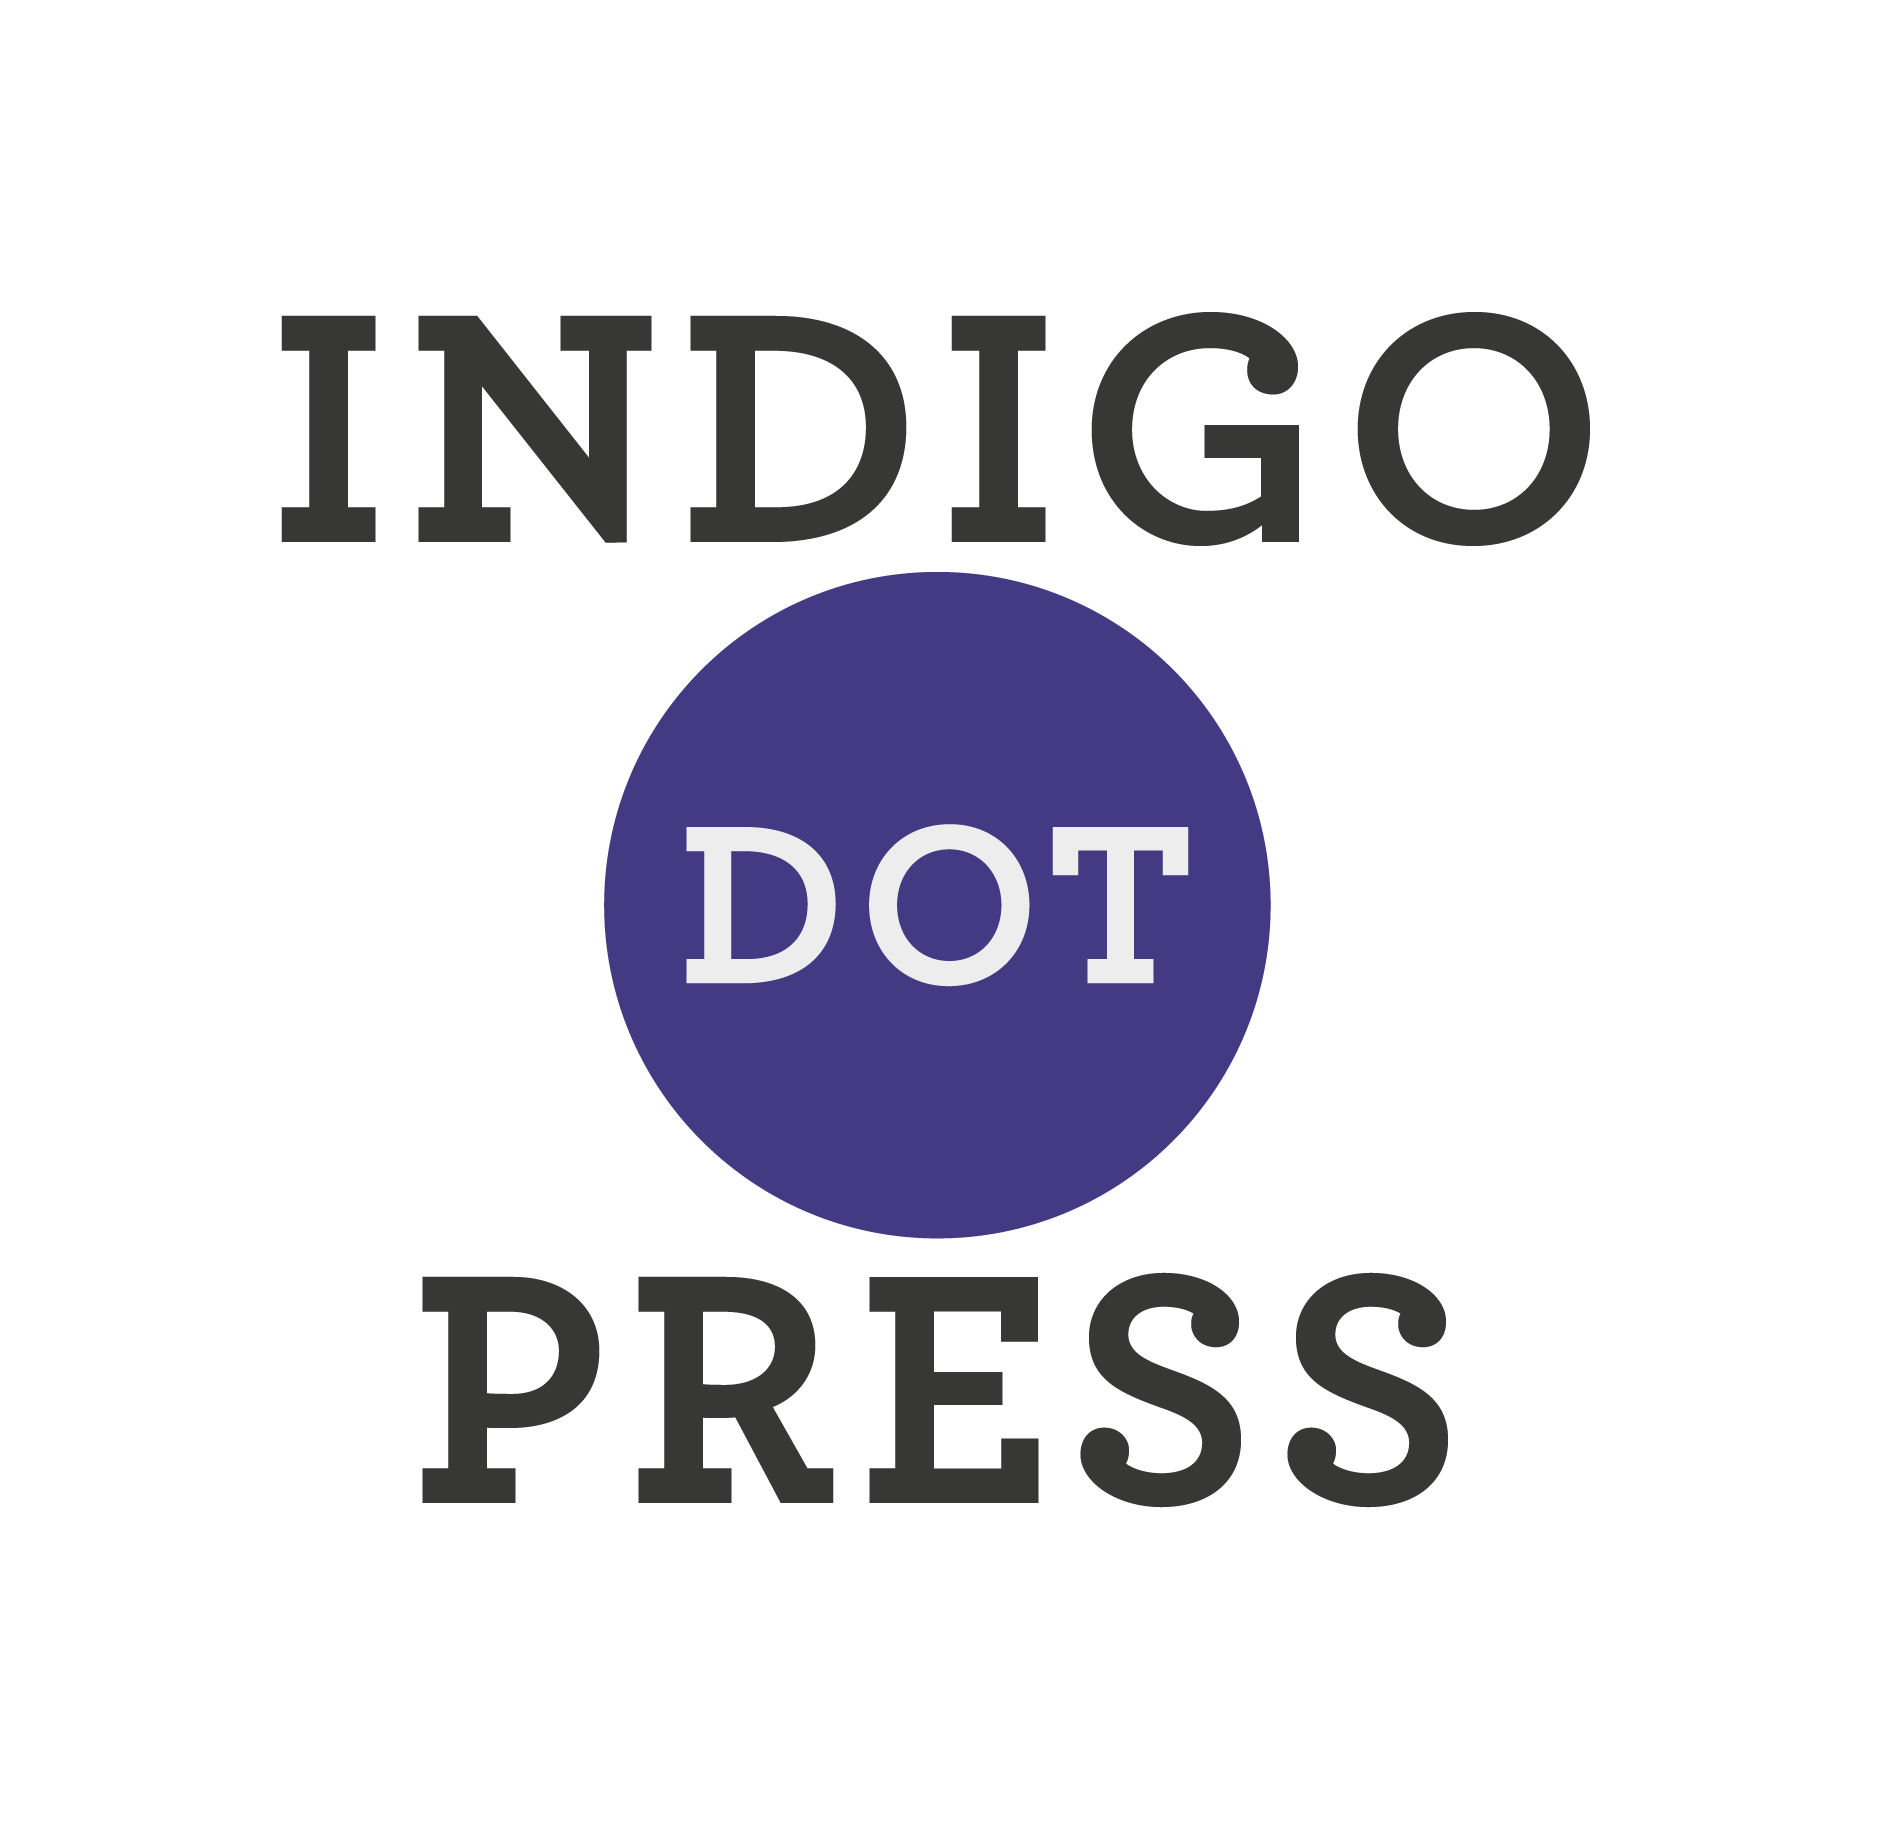 Indigo Dot Press logo.png